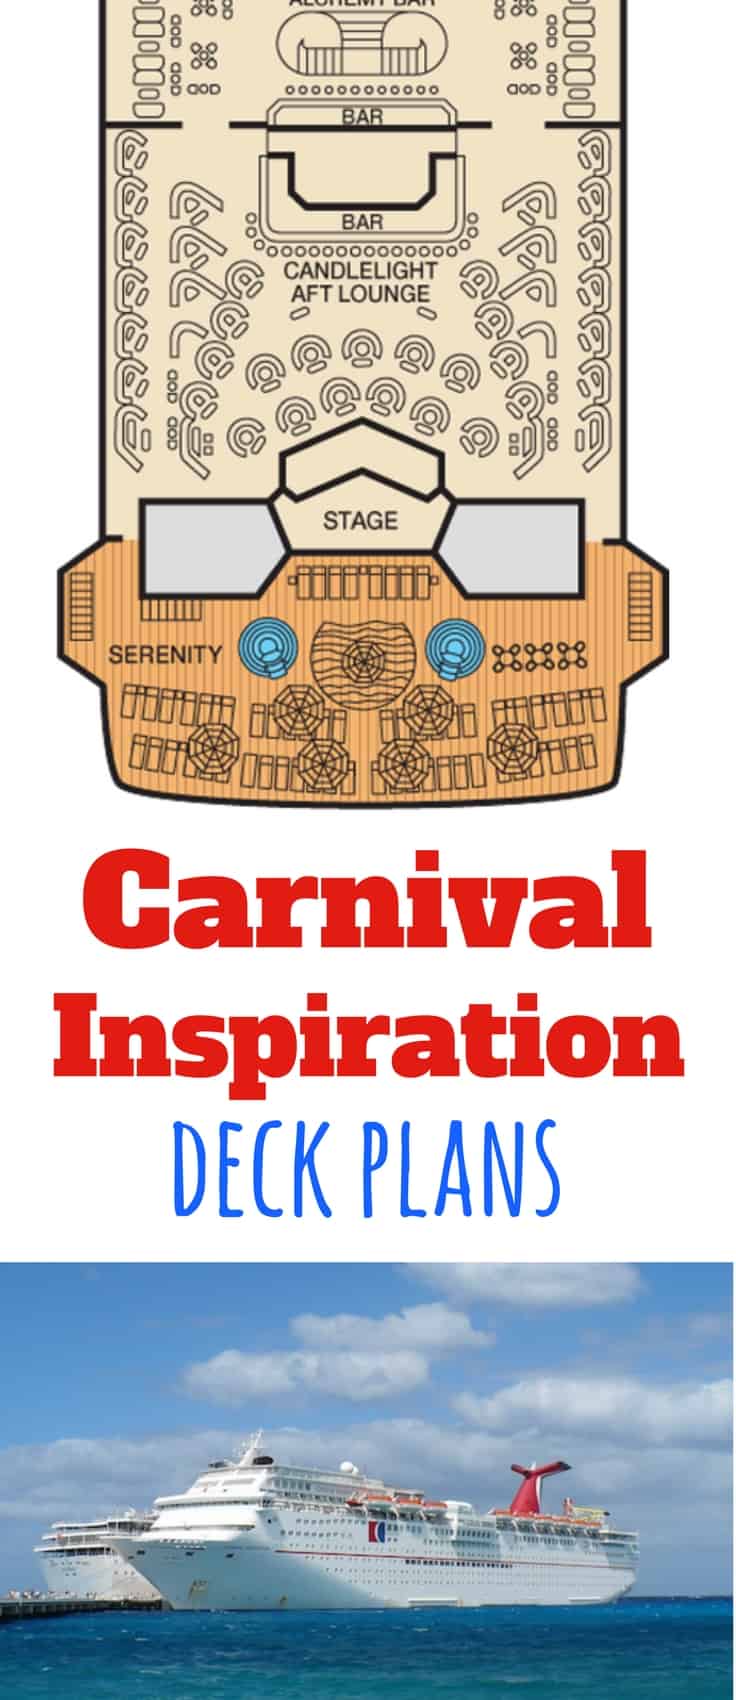 Carnival Breeze, Deck Plans, Activities & Sailings